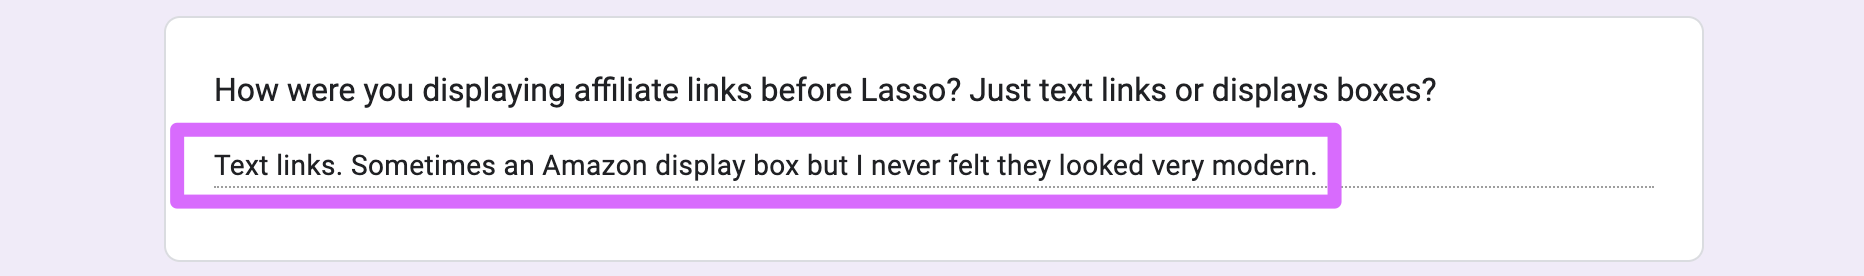 lasso customer survey response